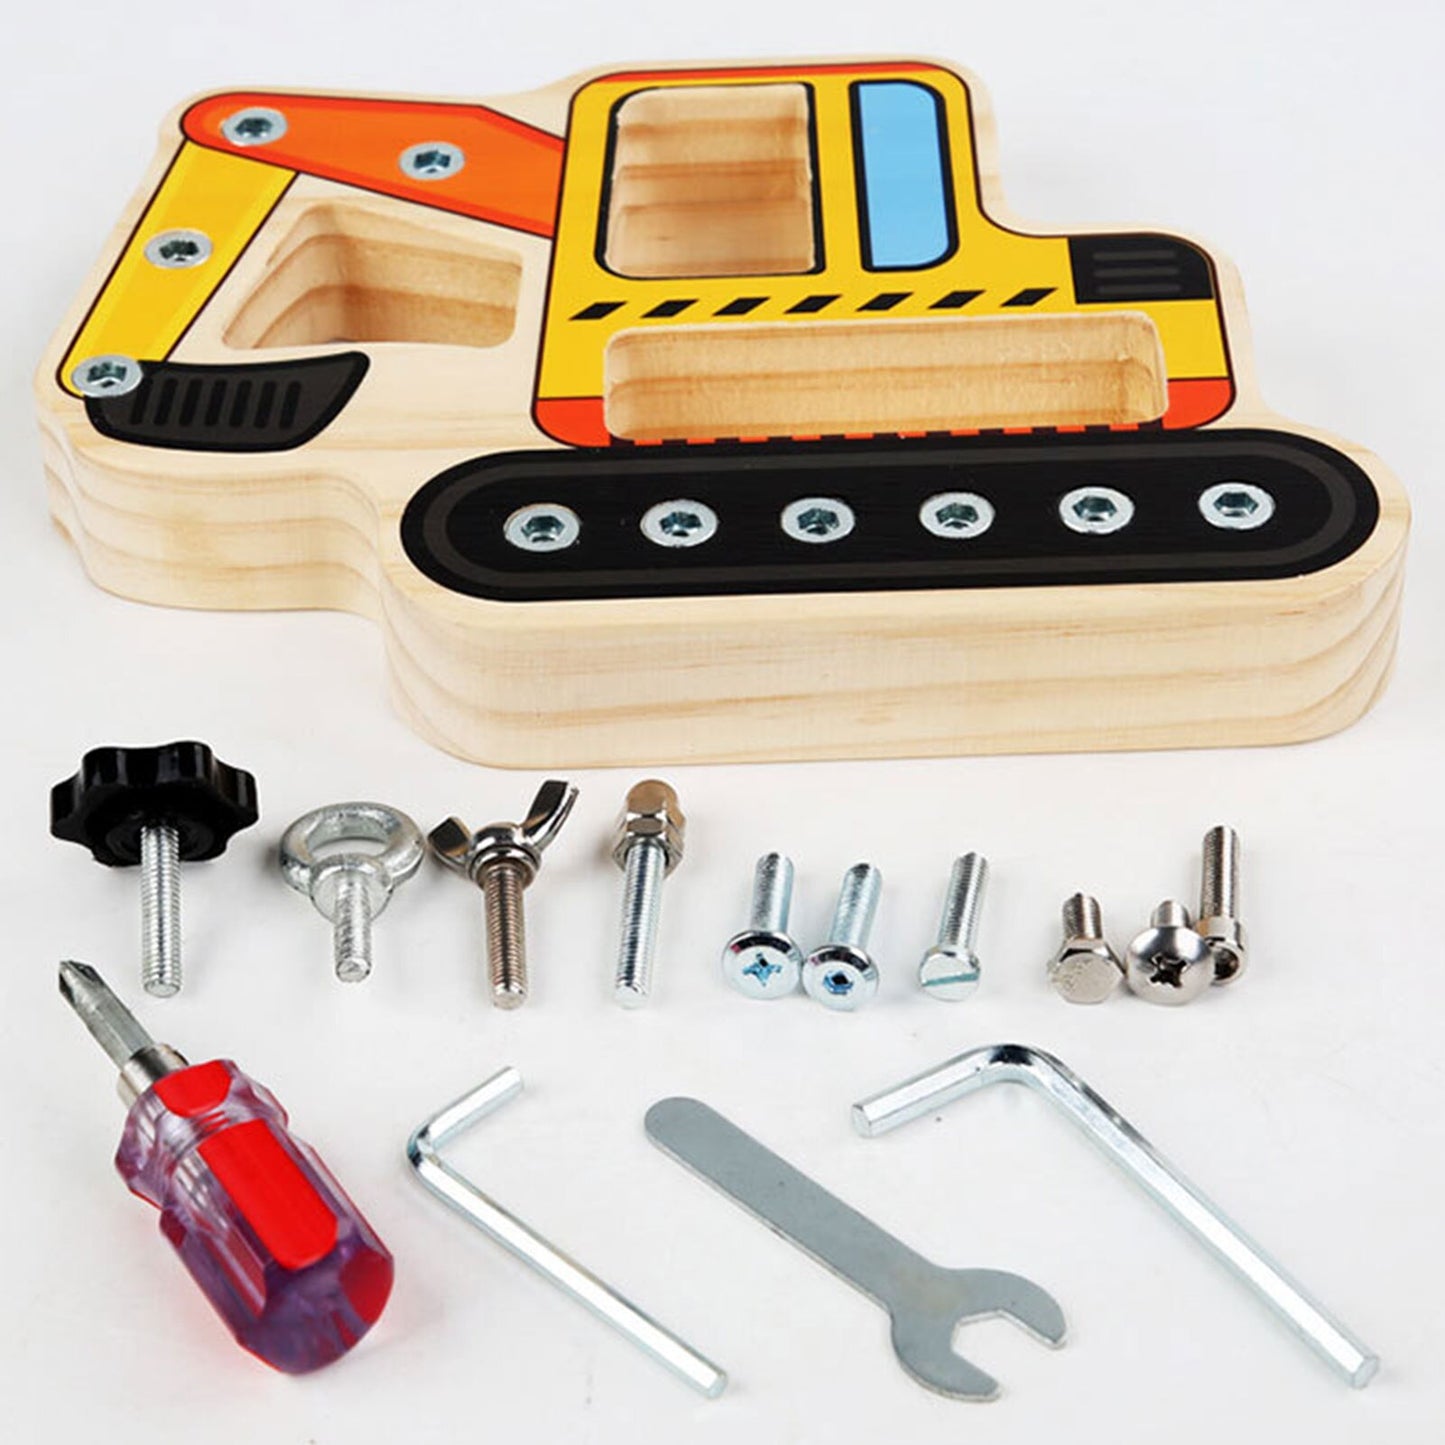 Wood Screw Board Repair Toy - Hands-On Building Set for Kids